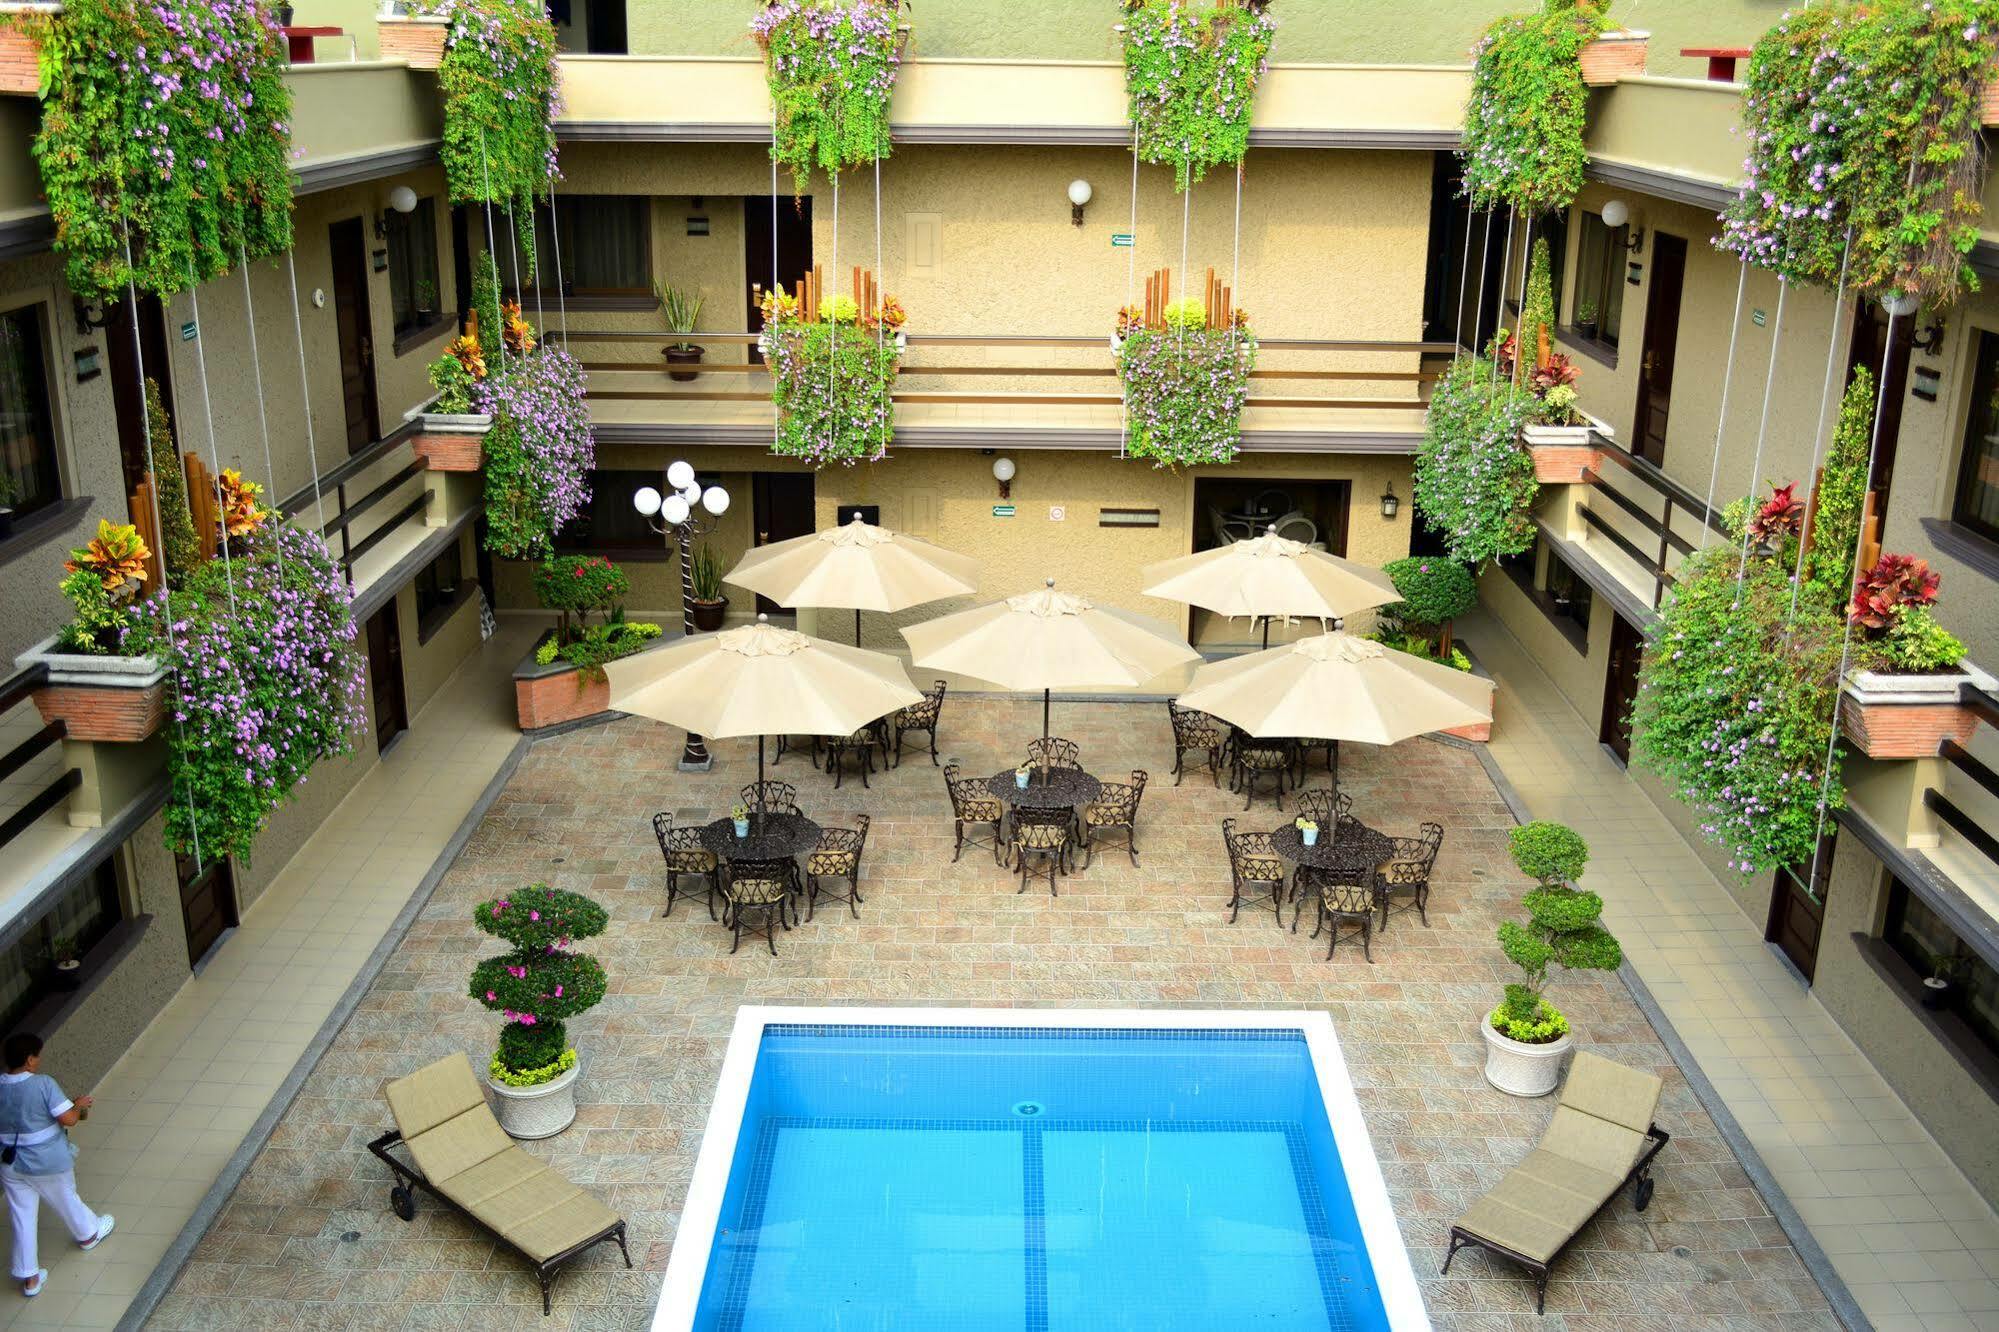 Hotel Layfer Del Centro, Cordoba, Ver Extérieur photo